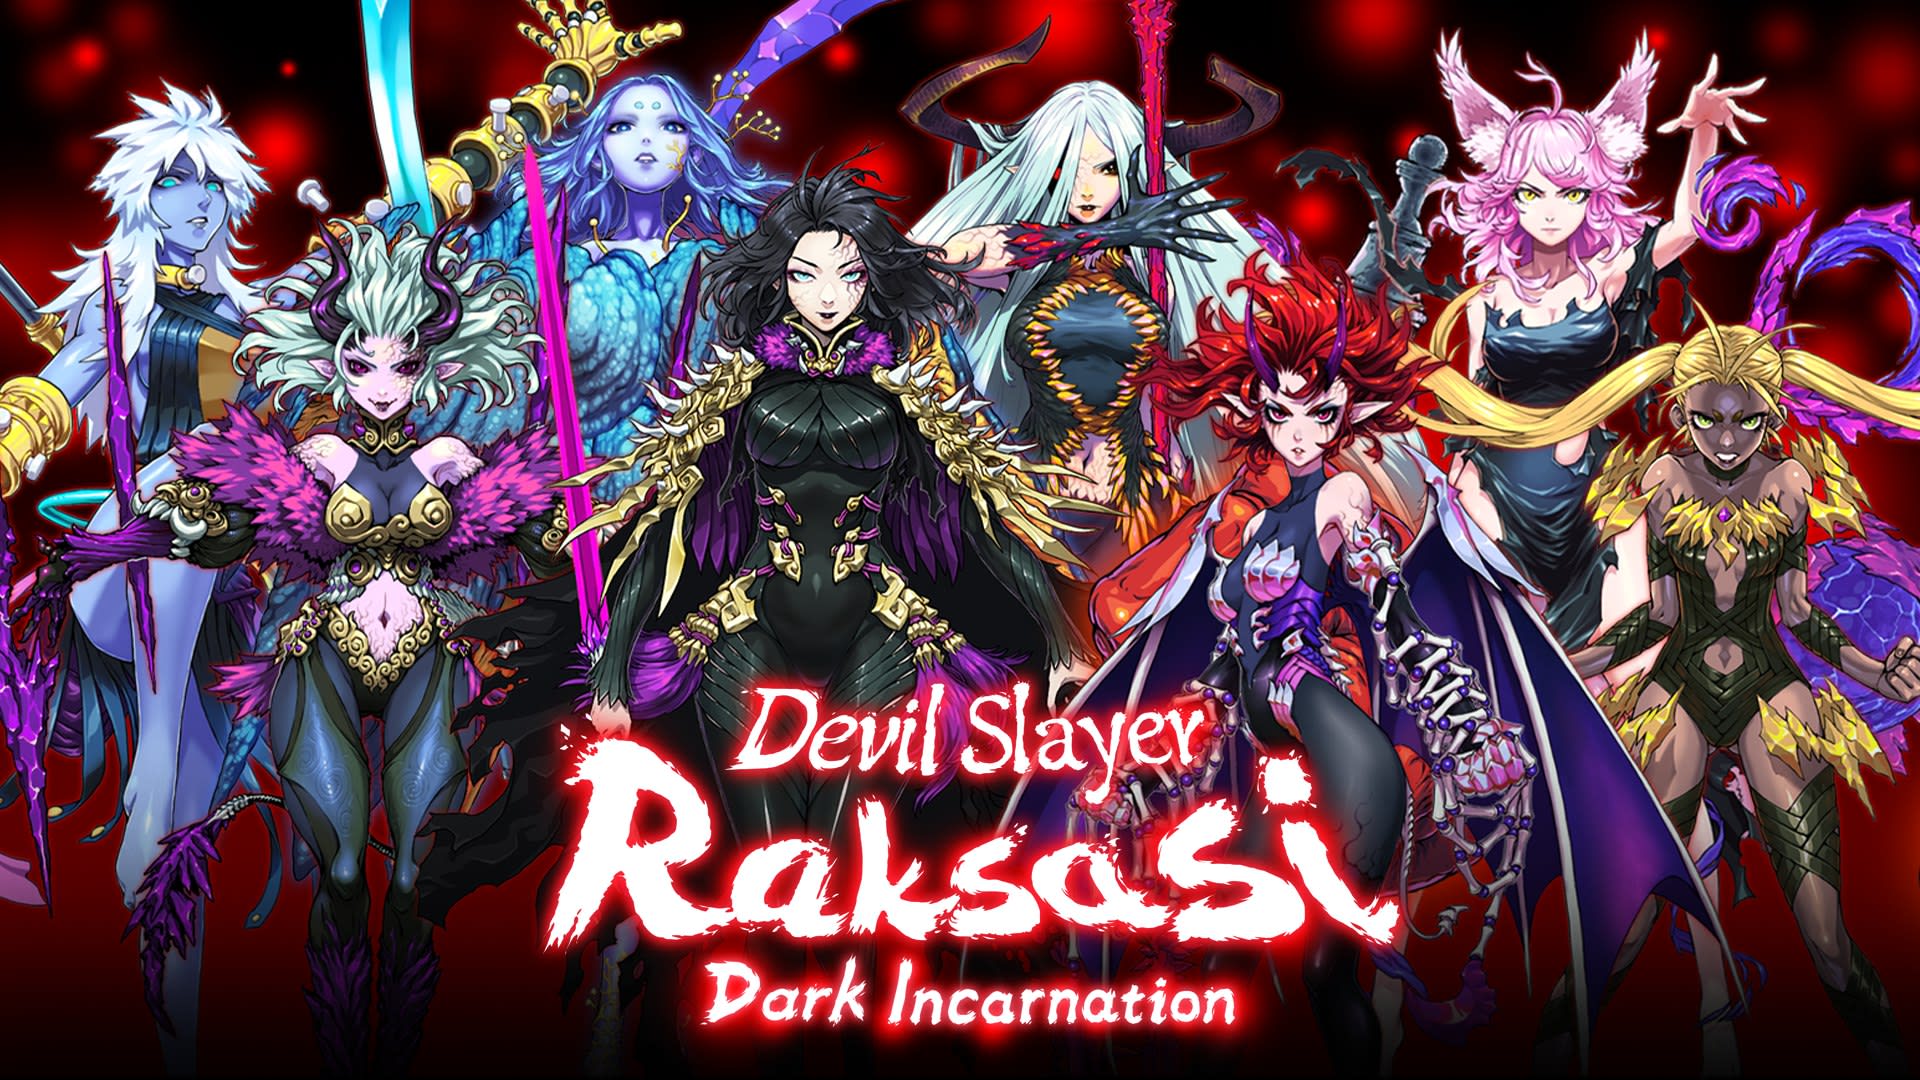 Devil Slayer Raksasi: Incarnation of Darkness